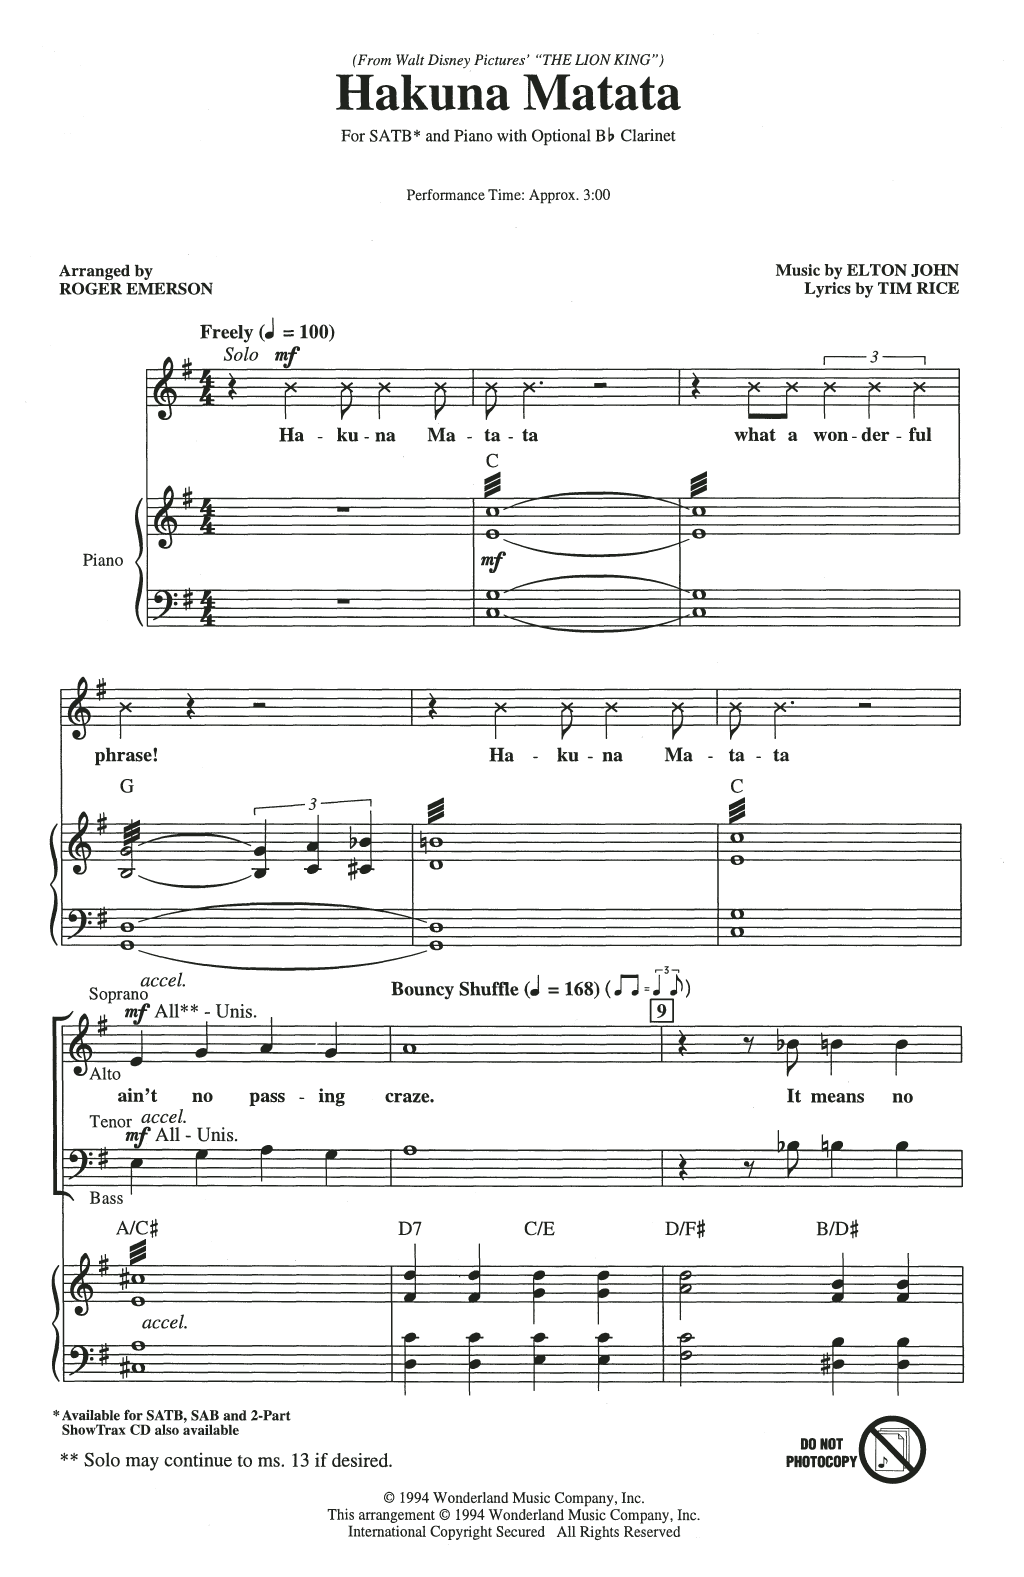 Elton John Hakuna Matata (from Disney's The Lion King) (arr. Roger Emerson) Sheet Music Notes & Chords for SAB Choir - Download or Print PDF